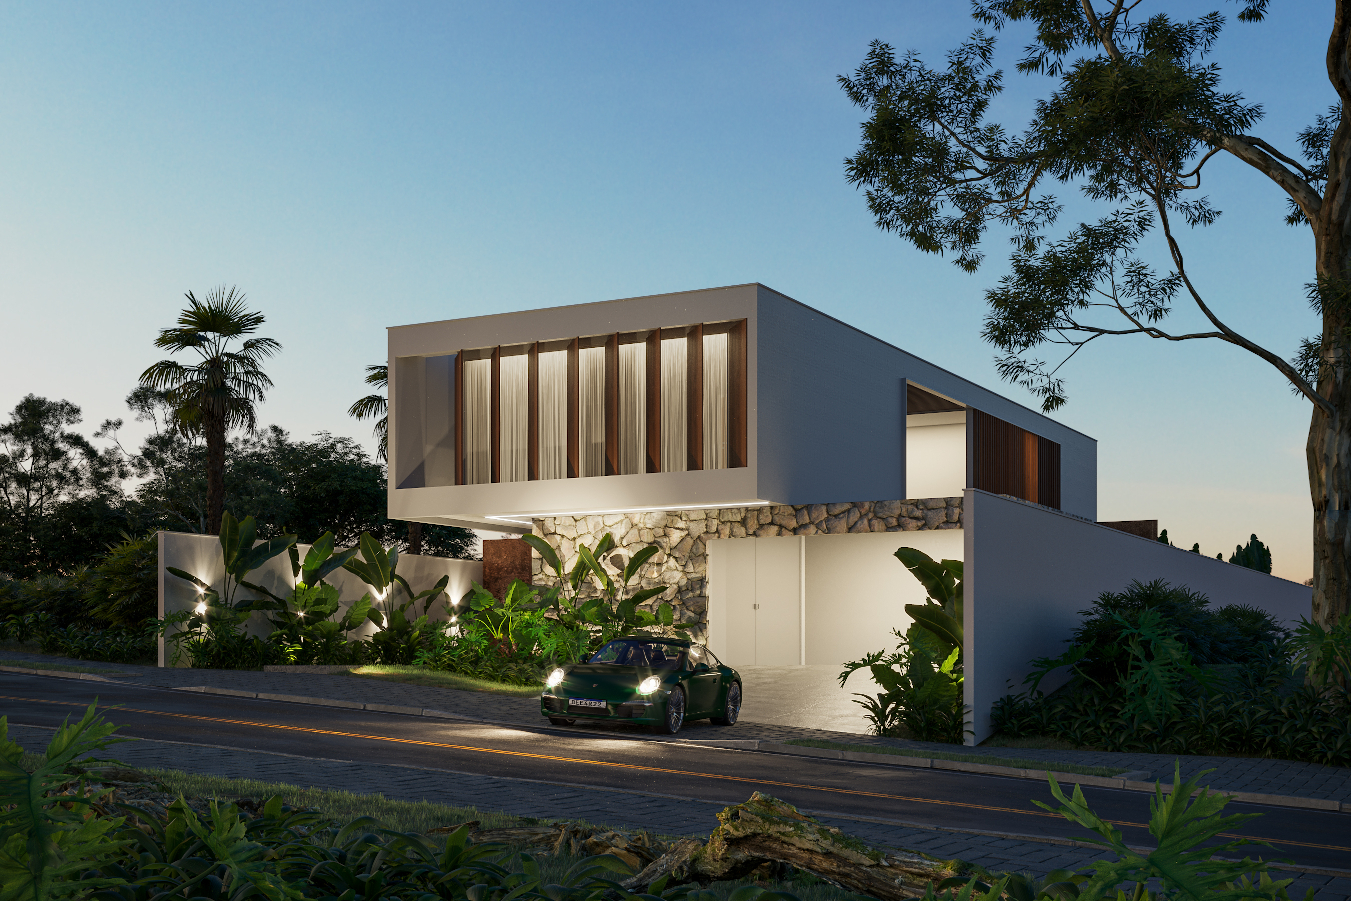 imagem noturna casa contemporanea fachadapedra natural, aço cortein madeira paisagismo tropical marajoara jundiaí